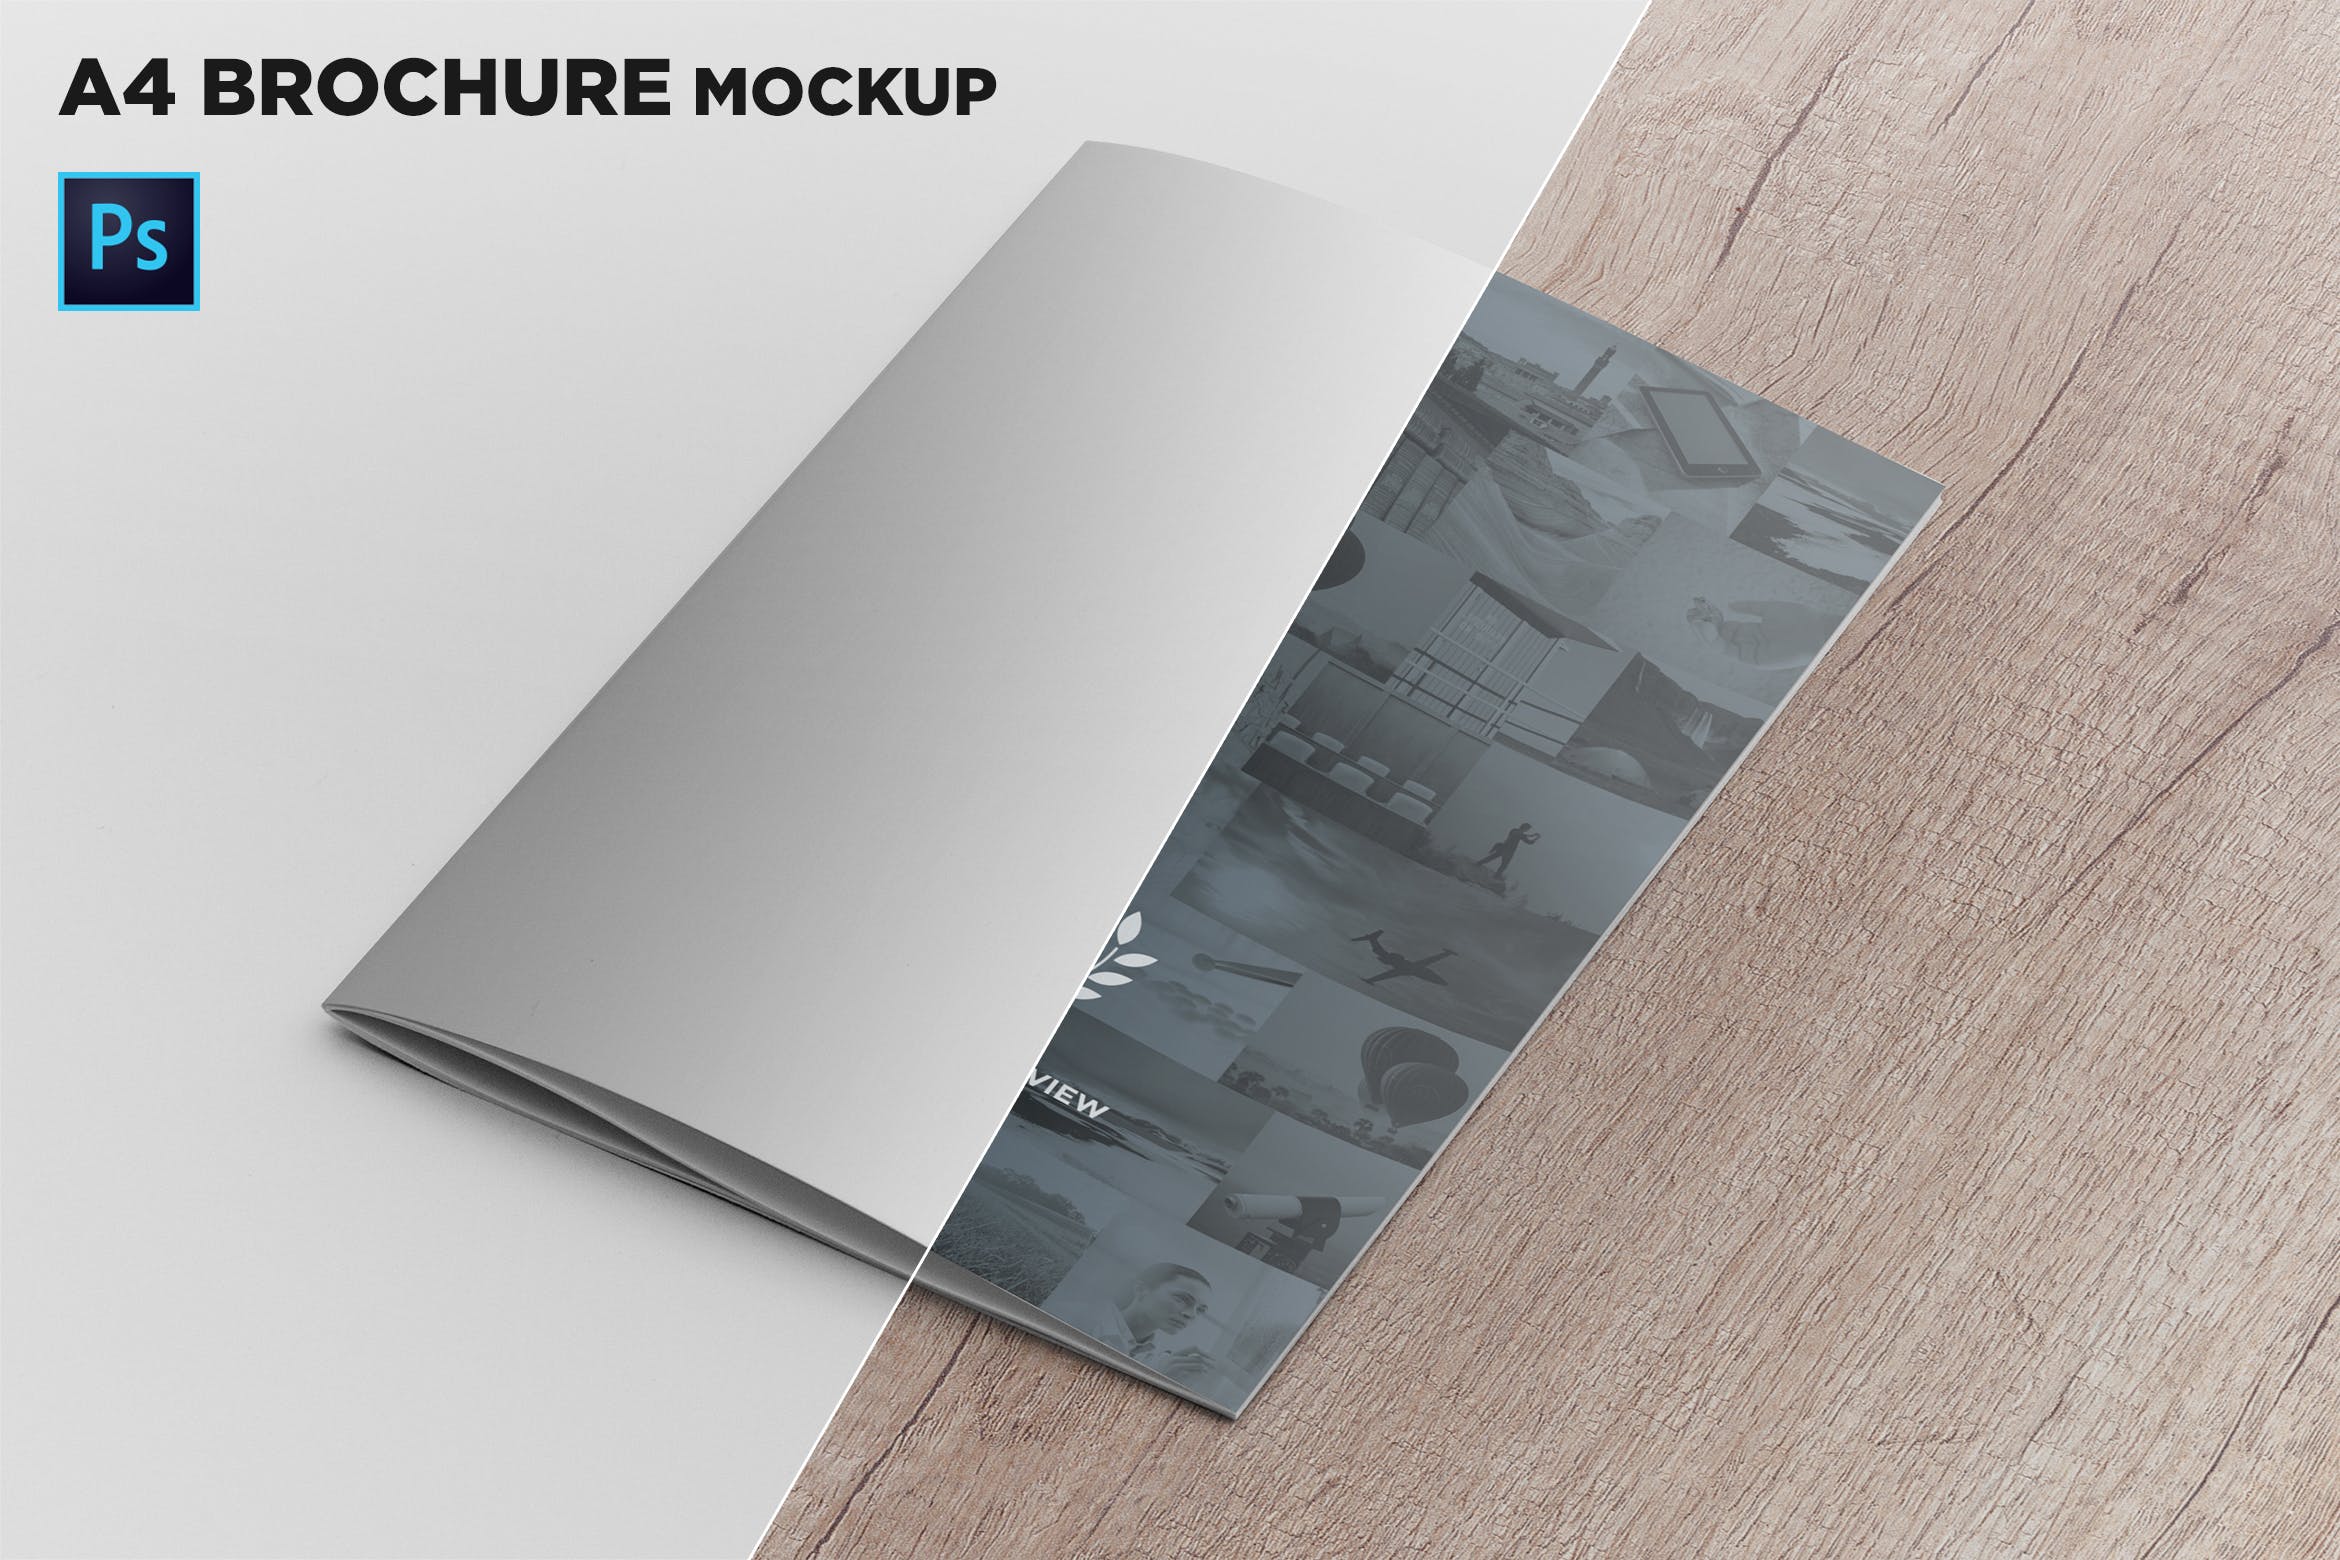 A4尺寸企业/品牌宣传册封面效果图样机第一素材精选模板 A4 Brochure Cover Mockup Perspective View插图